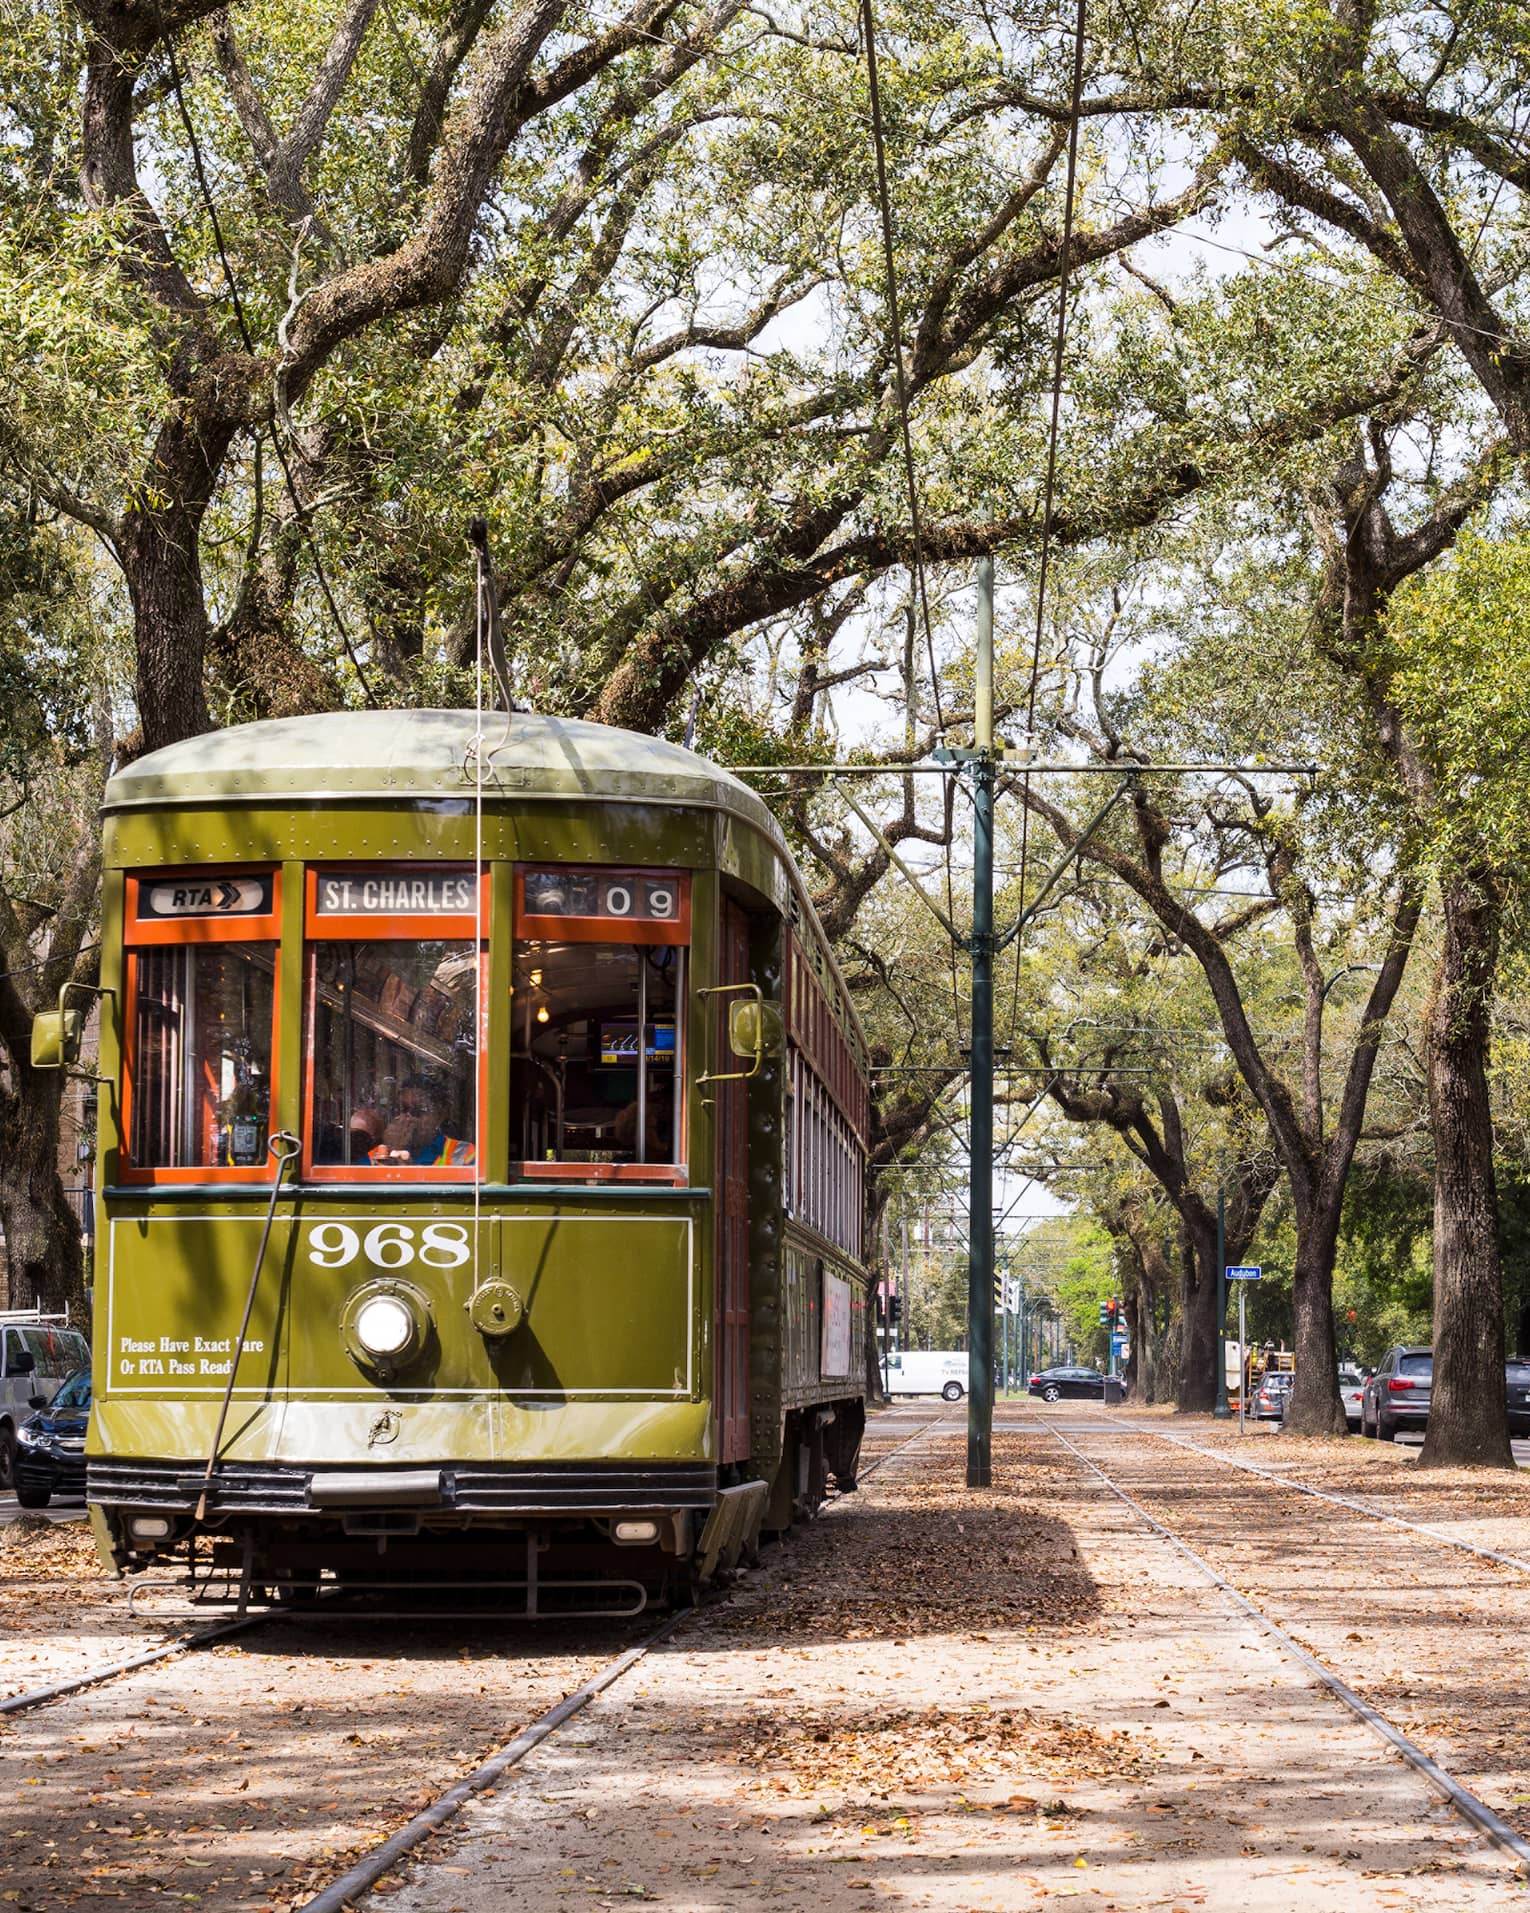 Vintage streetcar on track between trees on New Orleans street